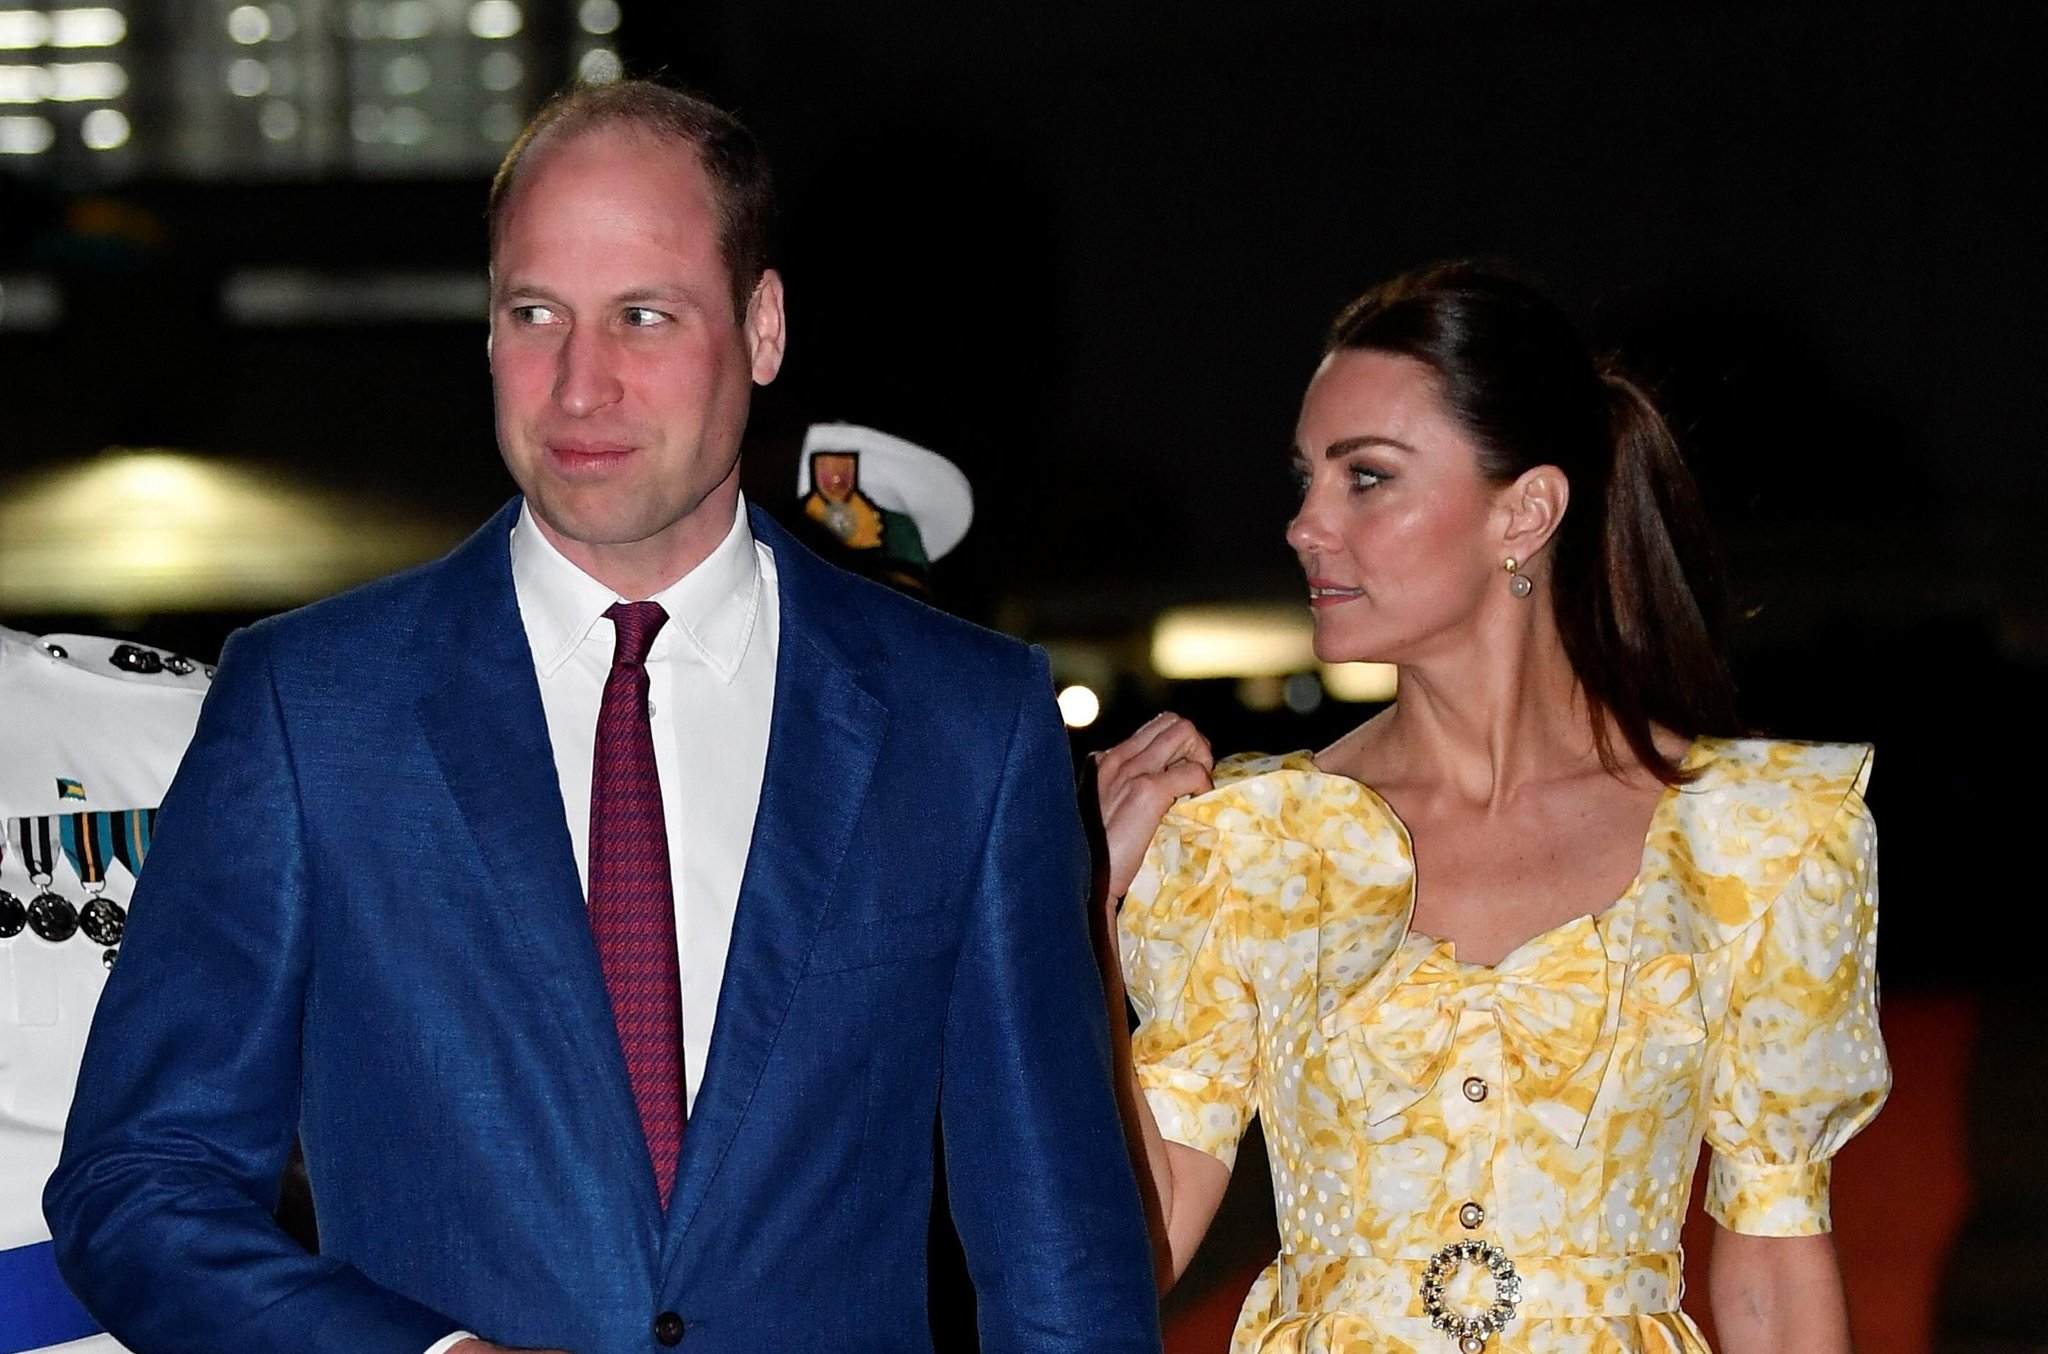 Royal couple back the work of UK charities in Ukraine